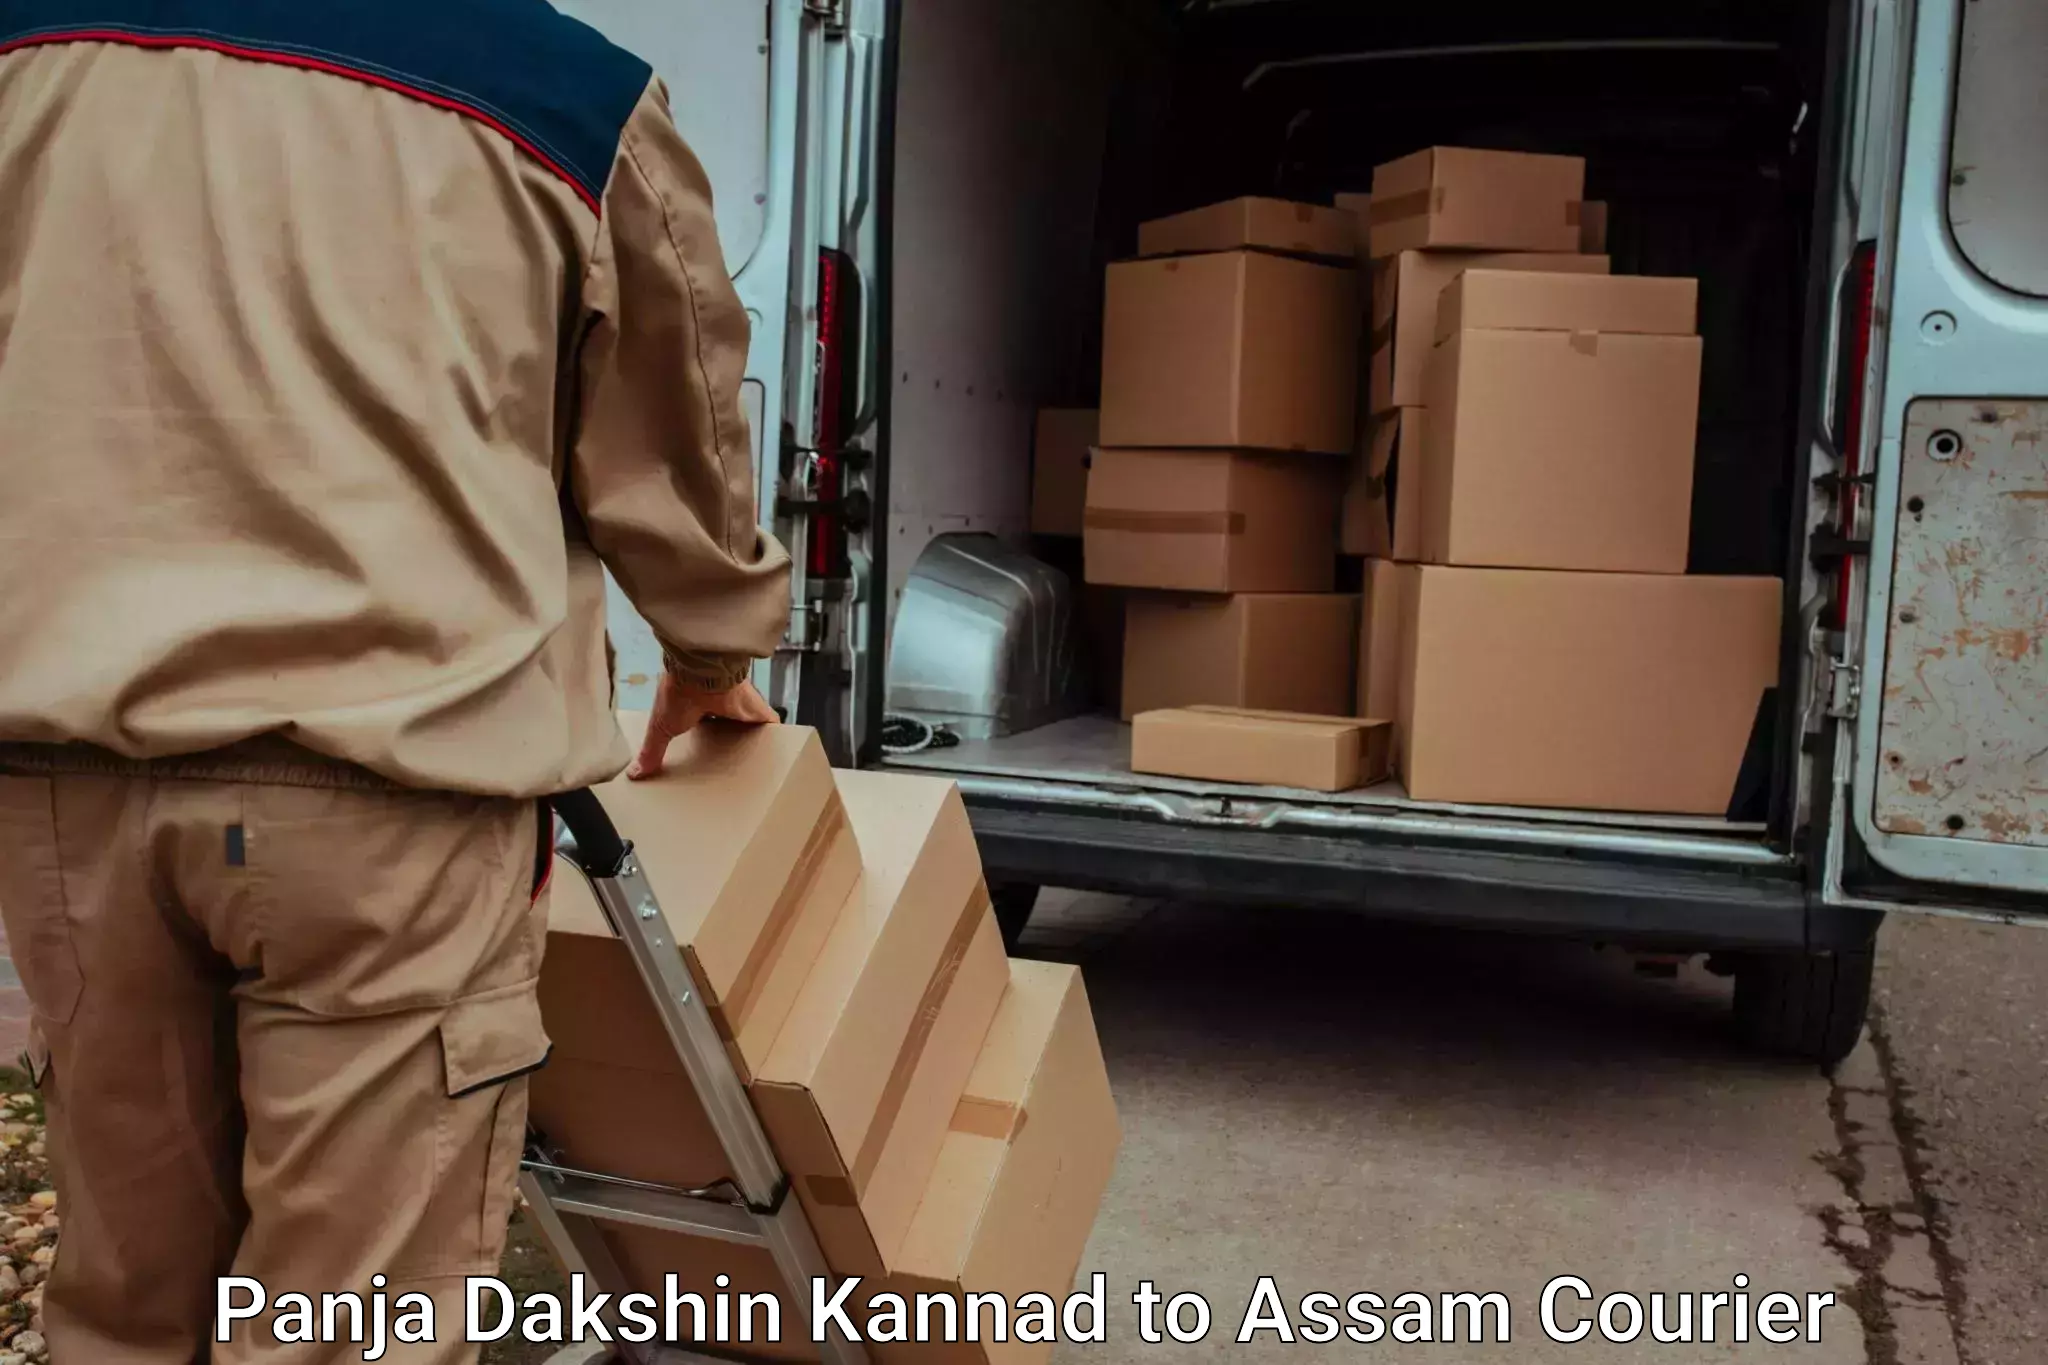 Same day luggage service Panja Dakshin Kannad to Assam